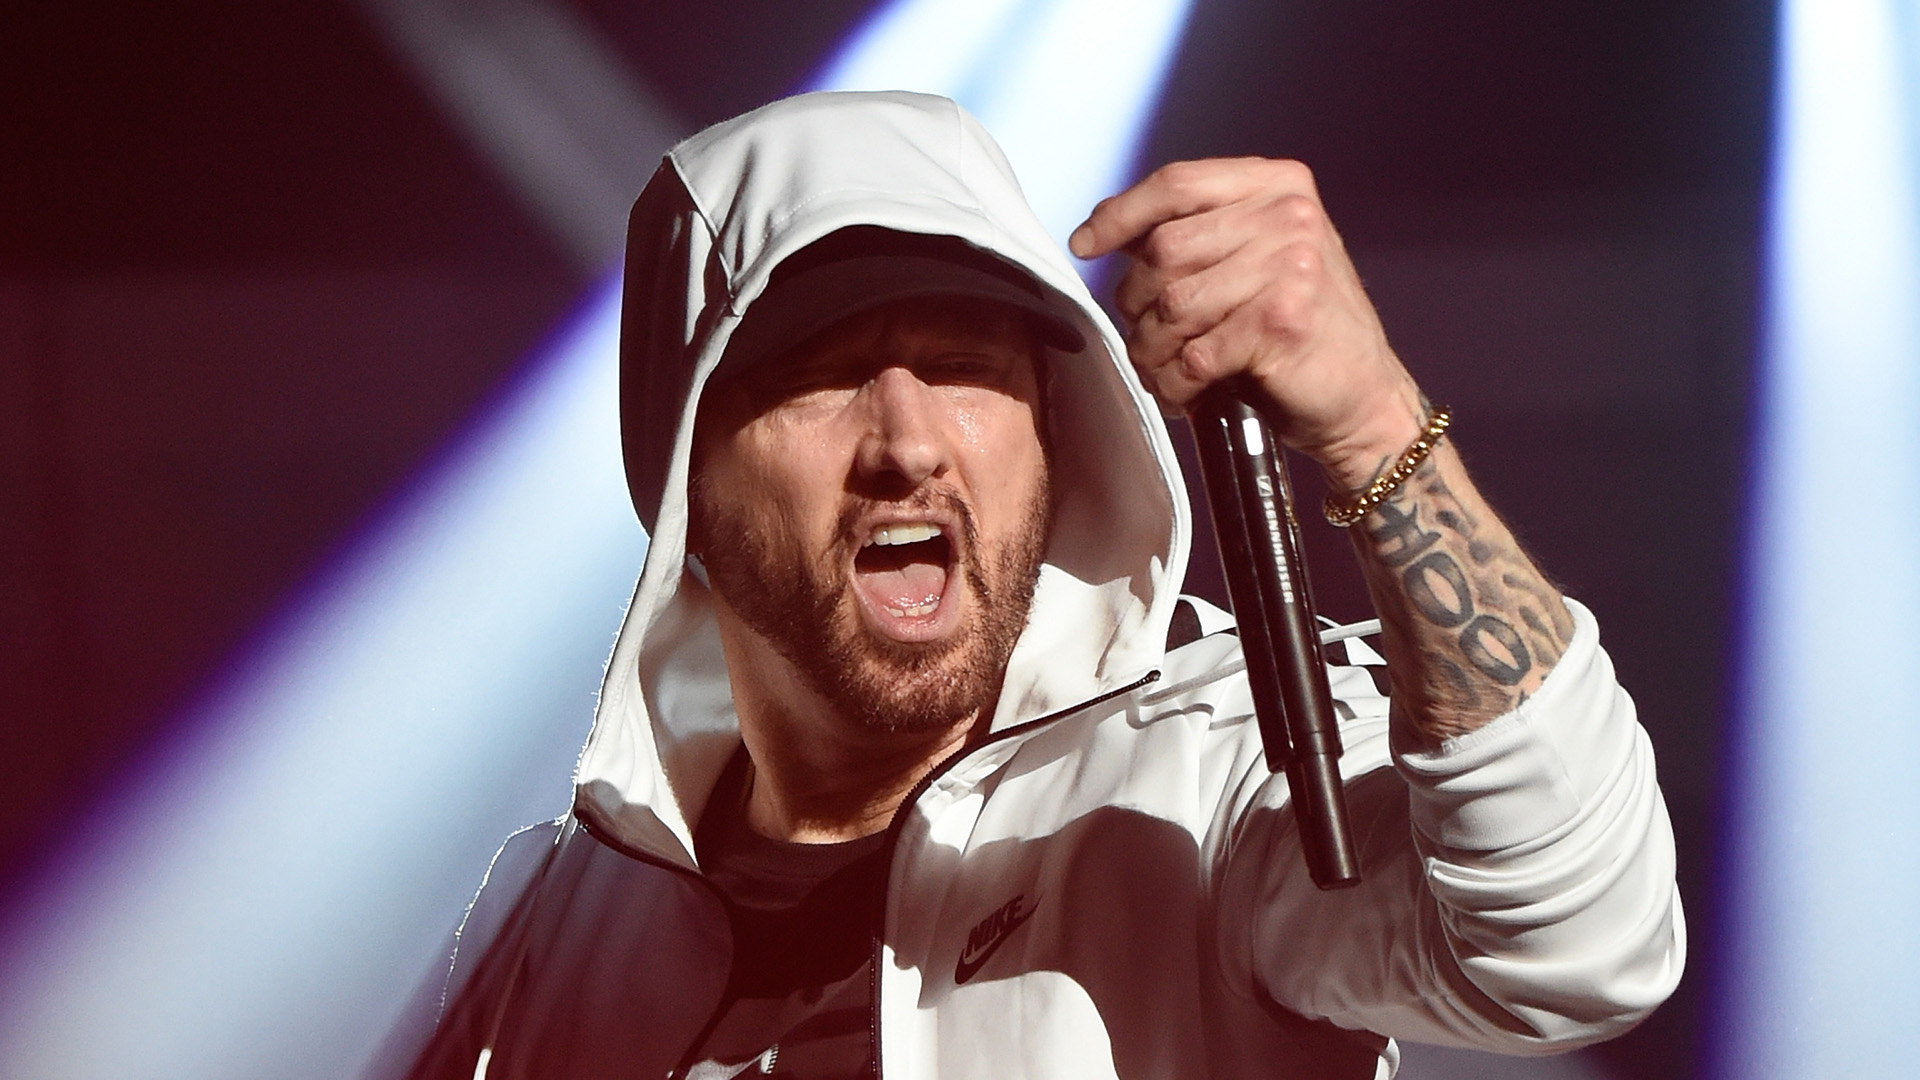 Sales Forecast for Eminem's 